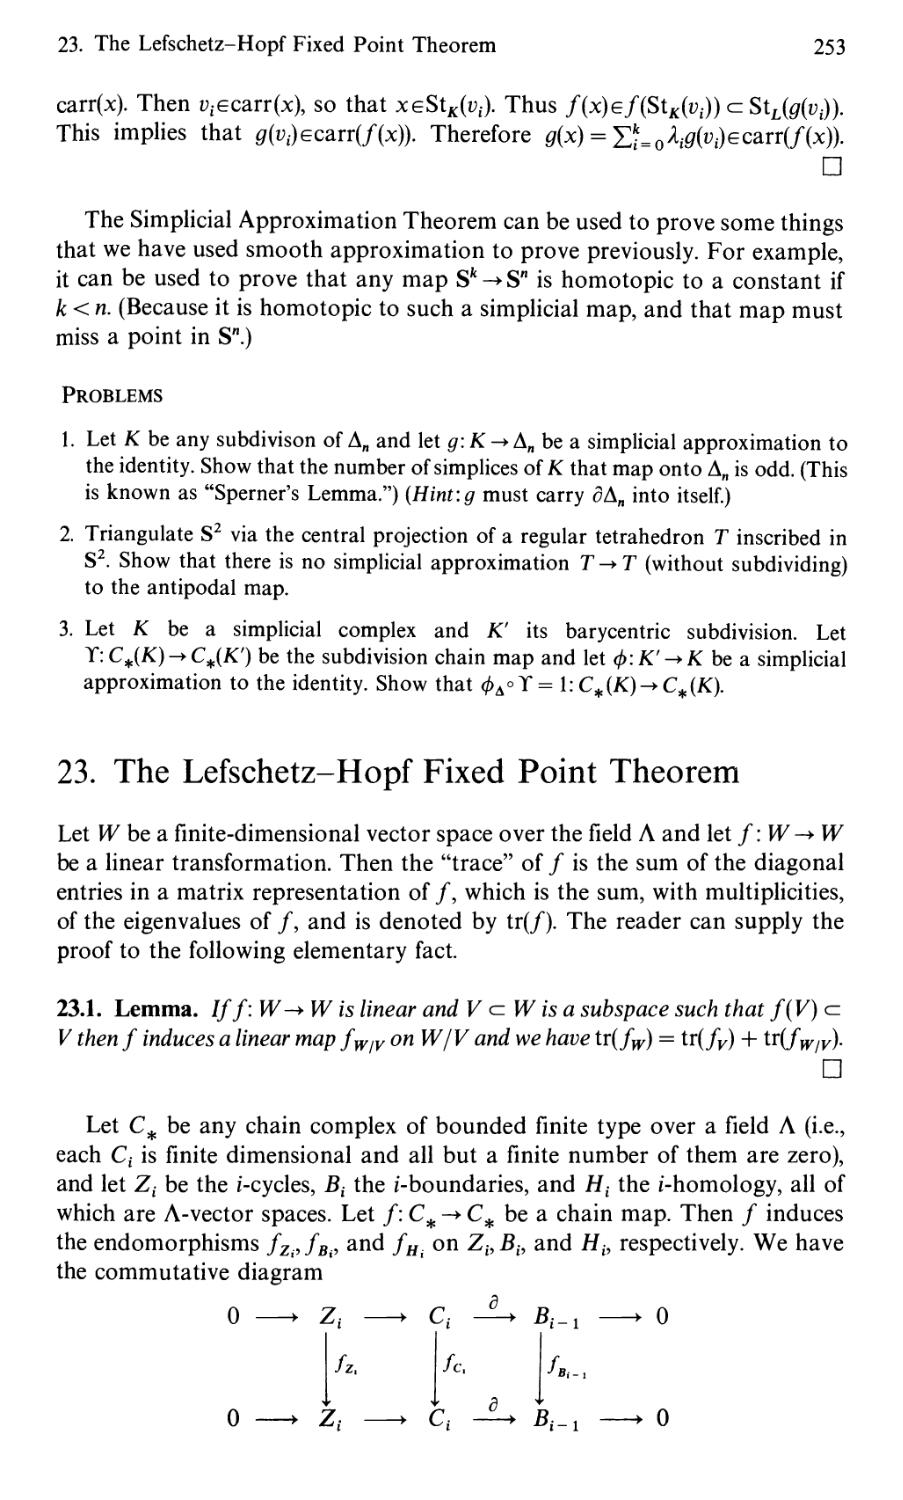 23. The Lefschetz-Hopf Fixed Point Theorem